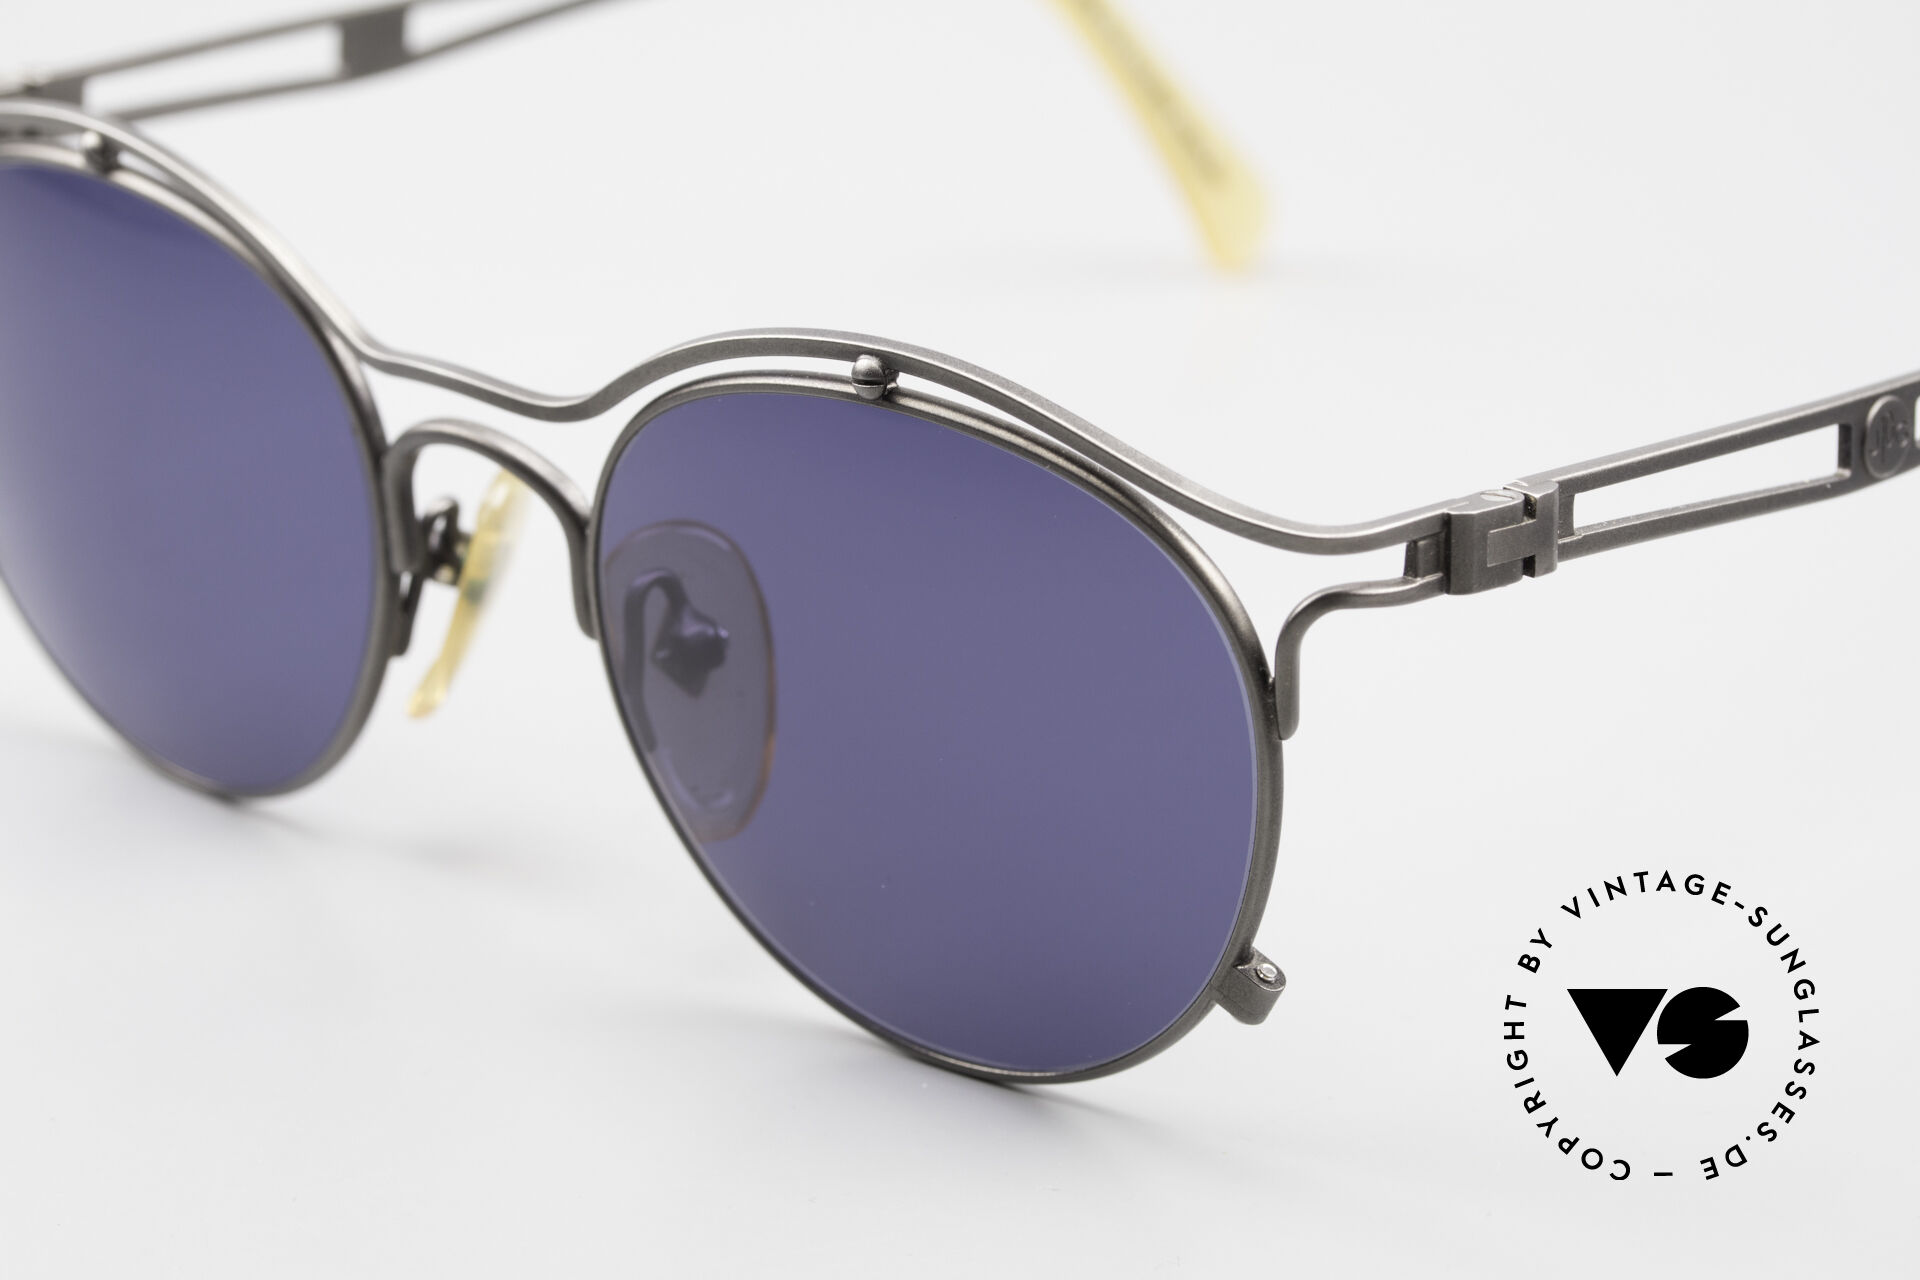 Jean Paul Gaultier 56-2174 Panto Style 90's Sunglasses